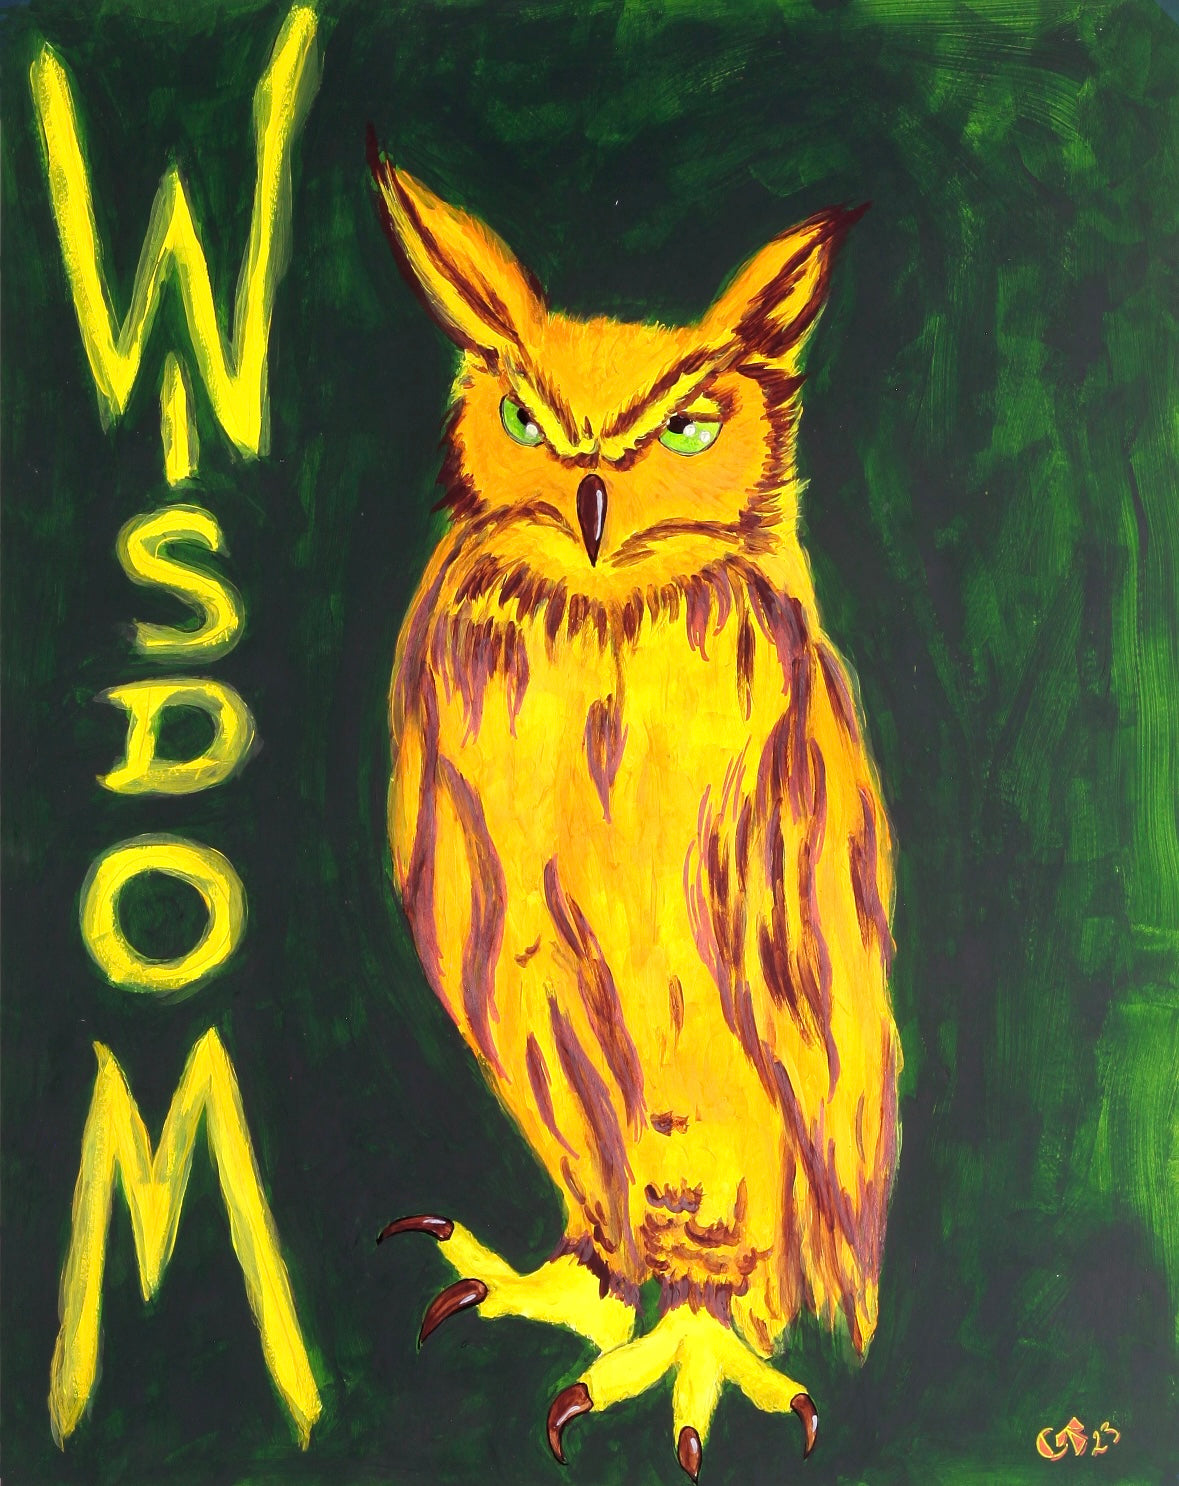 Chloe Trujillo's "Wisdom" Print